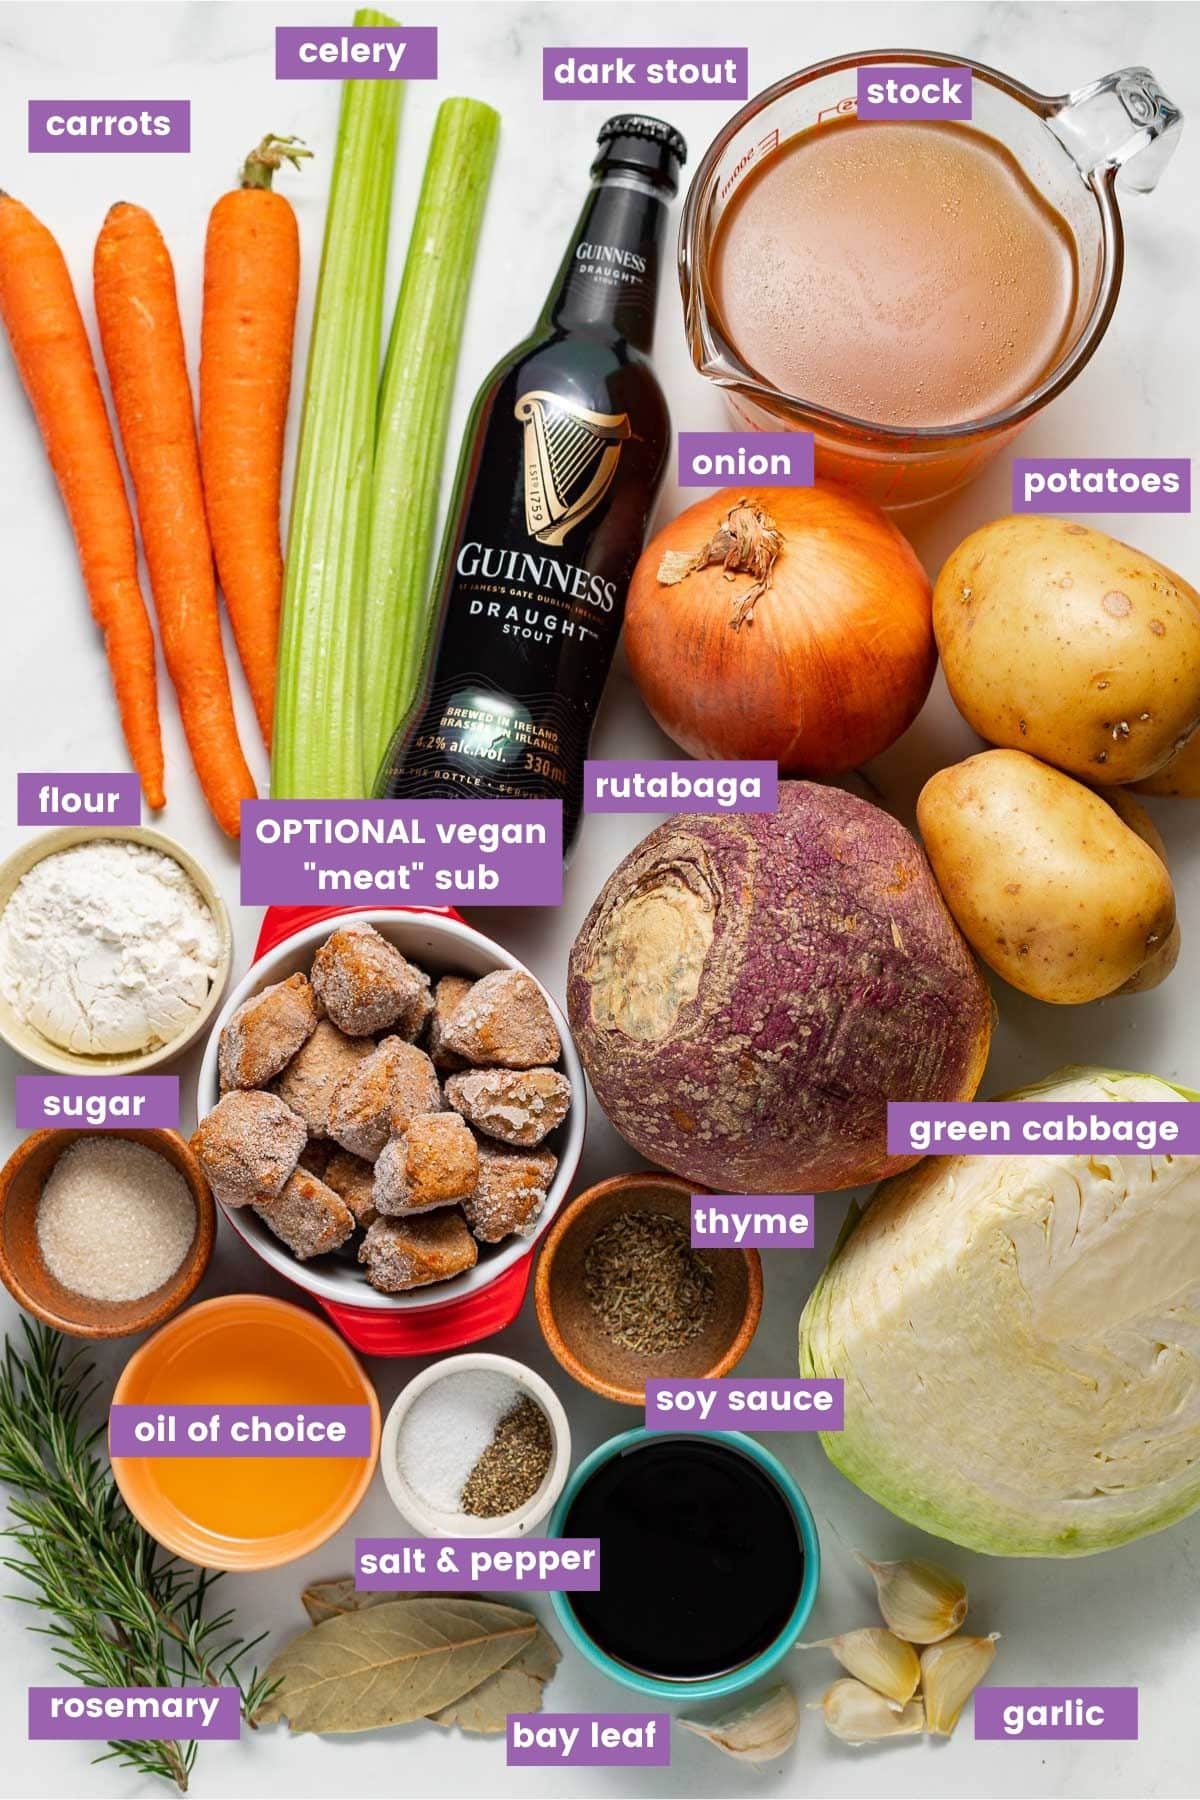 ingredients for or vegan Irish stew as per the written ingredient list